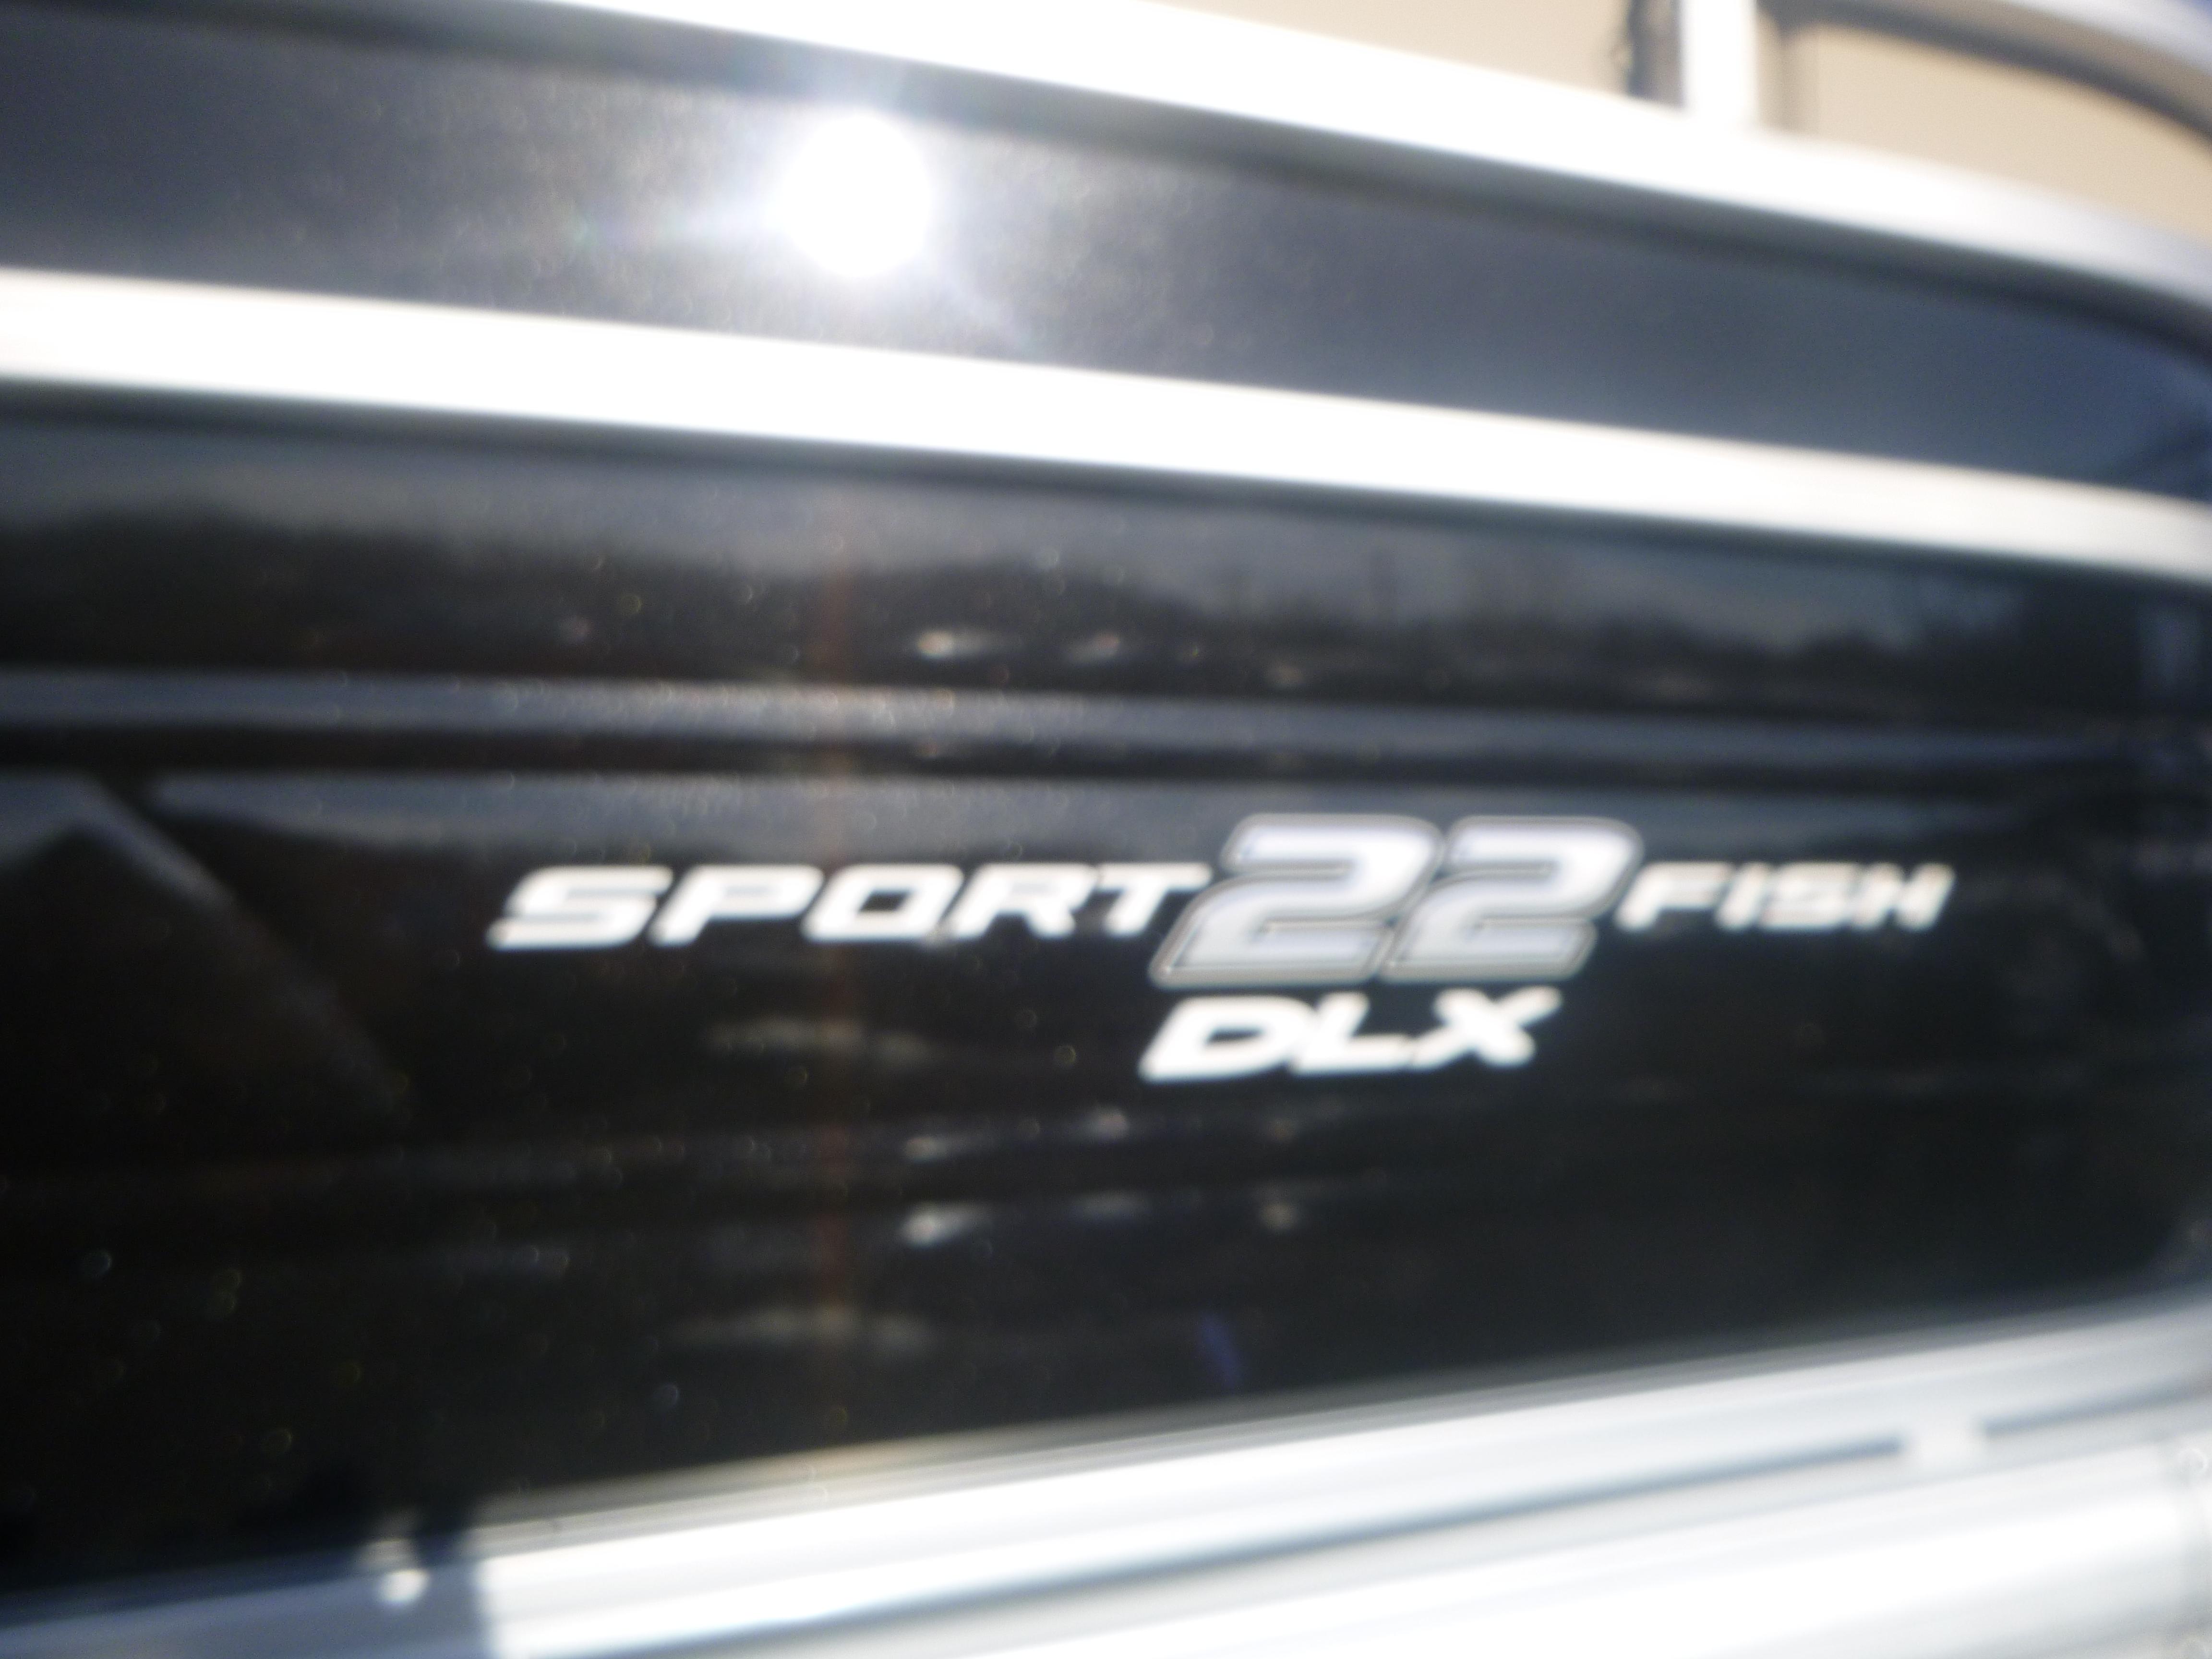 2024 Sun Tracker SportFish 22 DLX